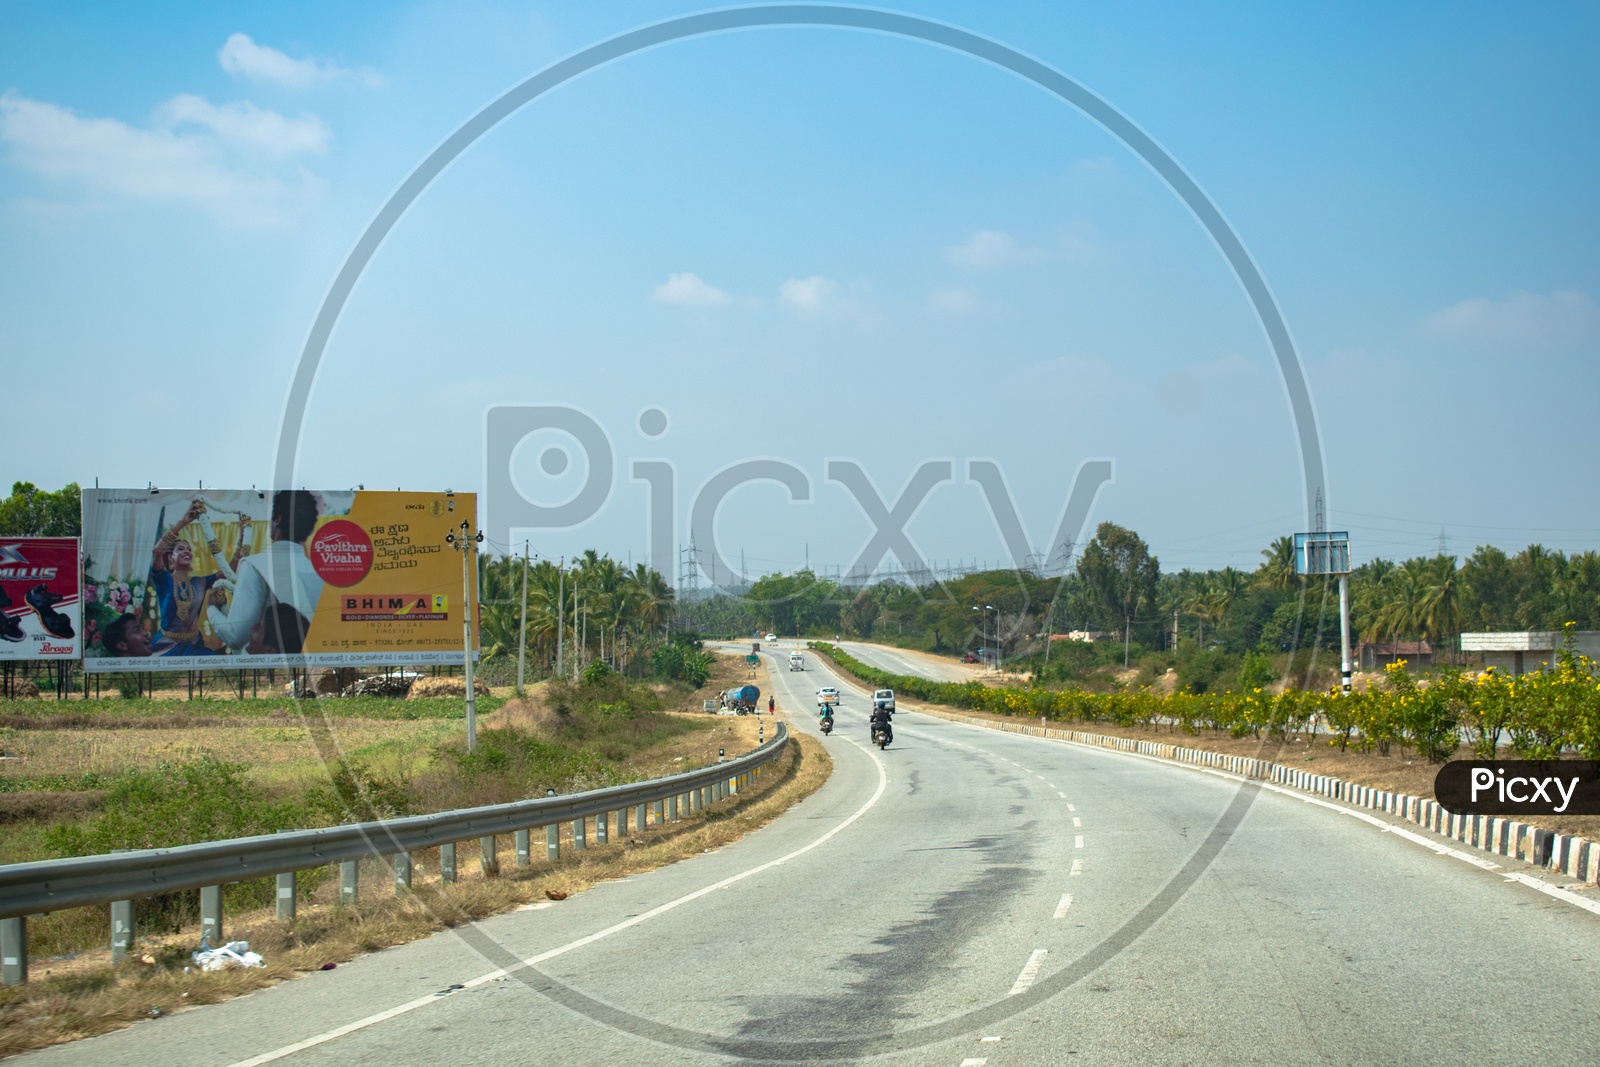 National Highways in Karnataka State